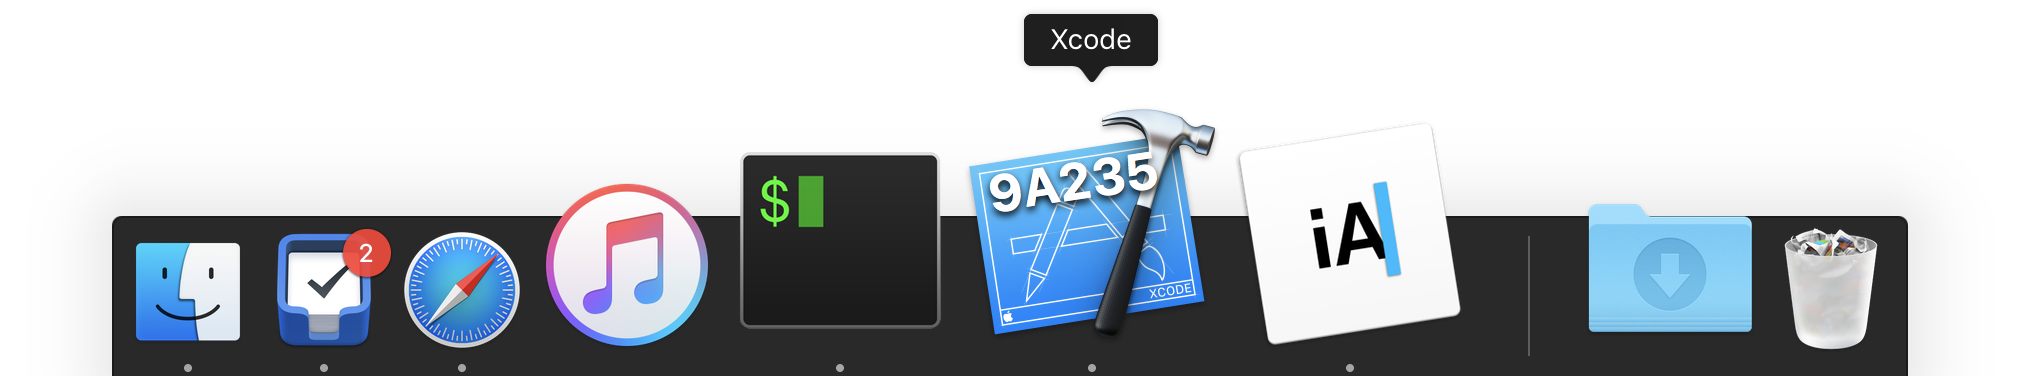 Xcode Dock Icon After AppleInternal